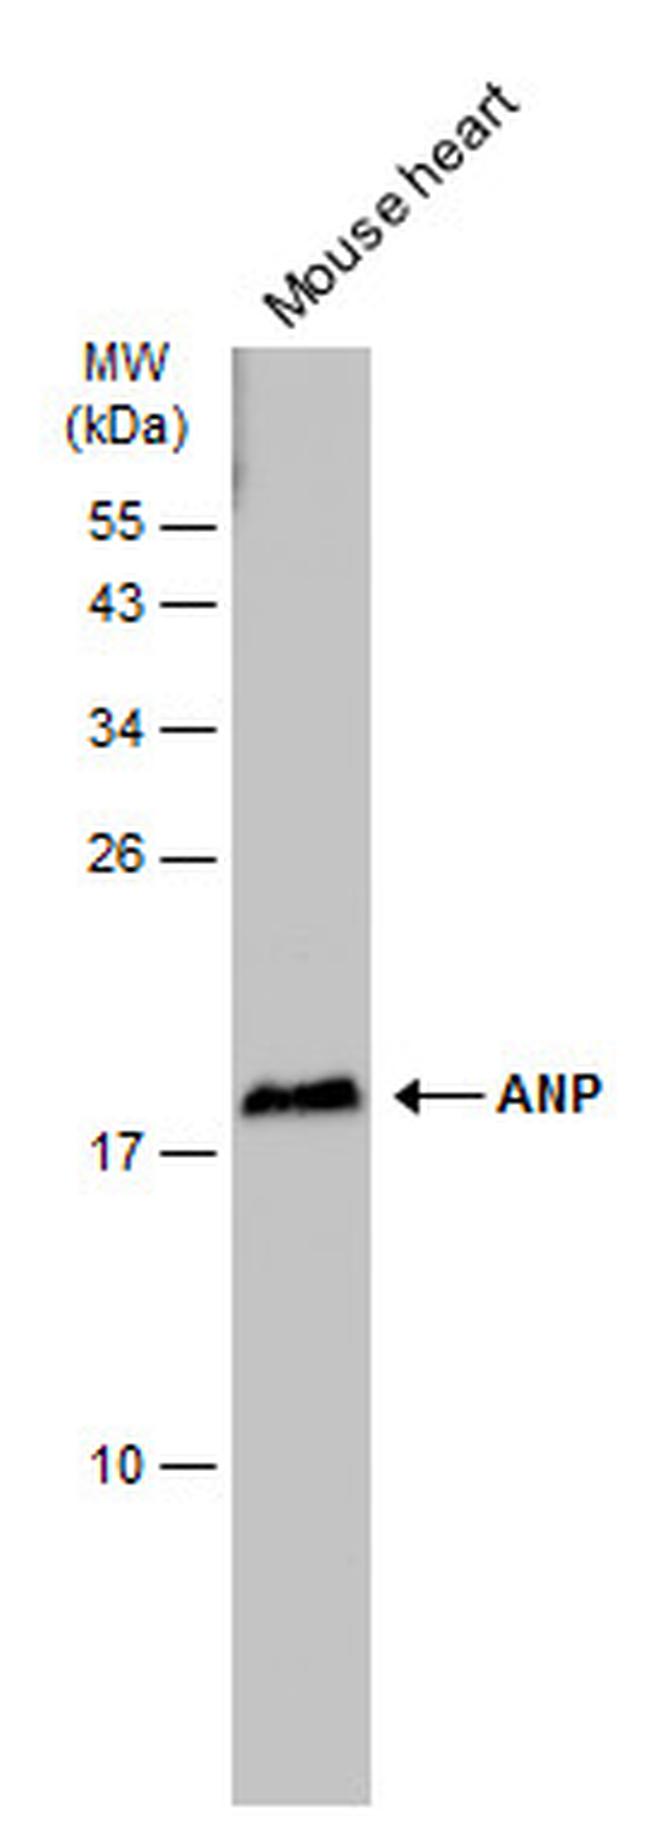 ANP Antibody in Western Blot (WB)